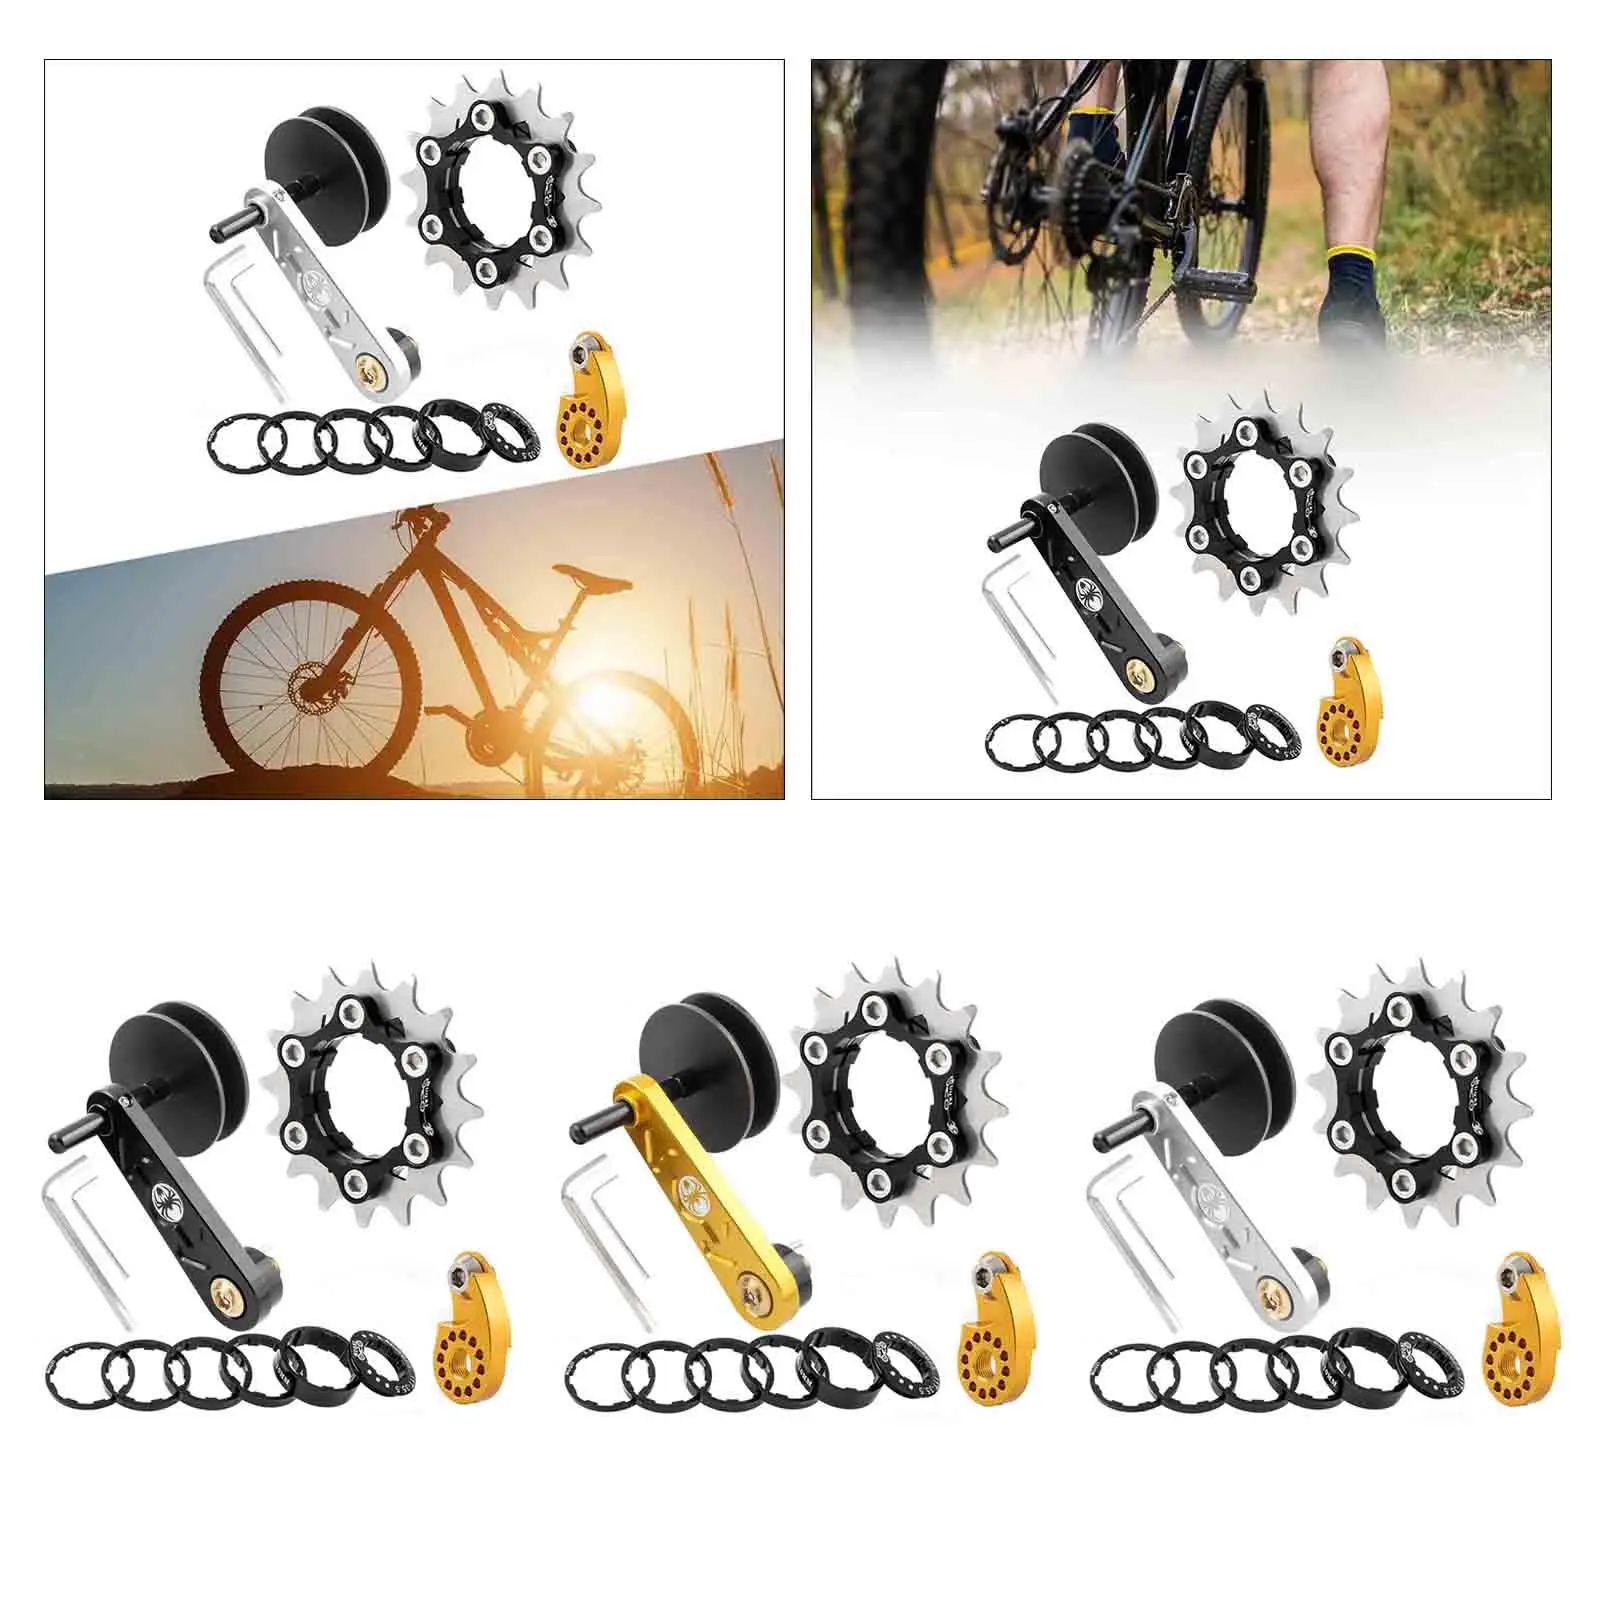 Single Speed Conversion Set 16T Flywheel Outdoor Biking Bicycle Freewheels Parts Chaining Converter Base Gaskets Torque Adjuster